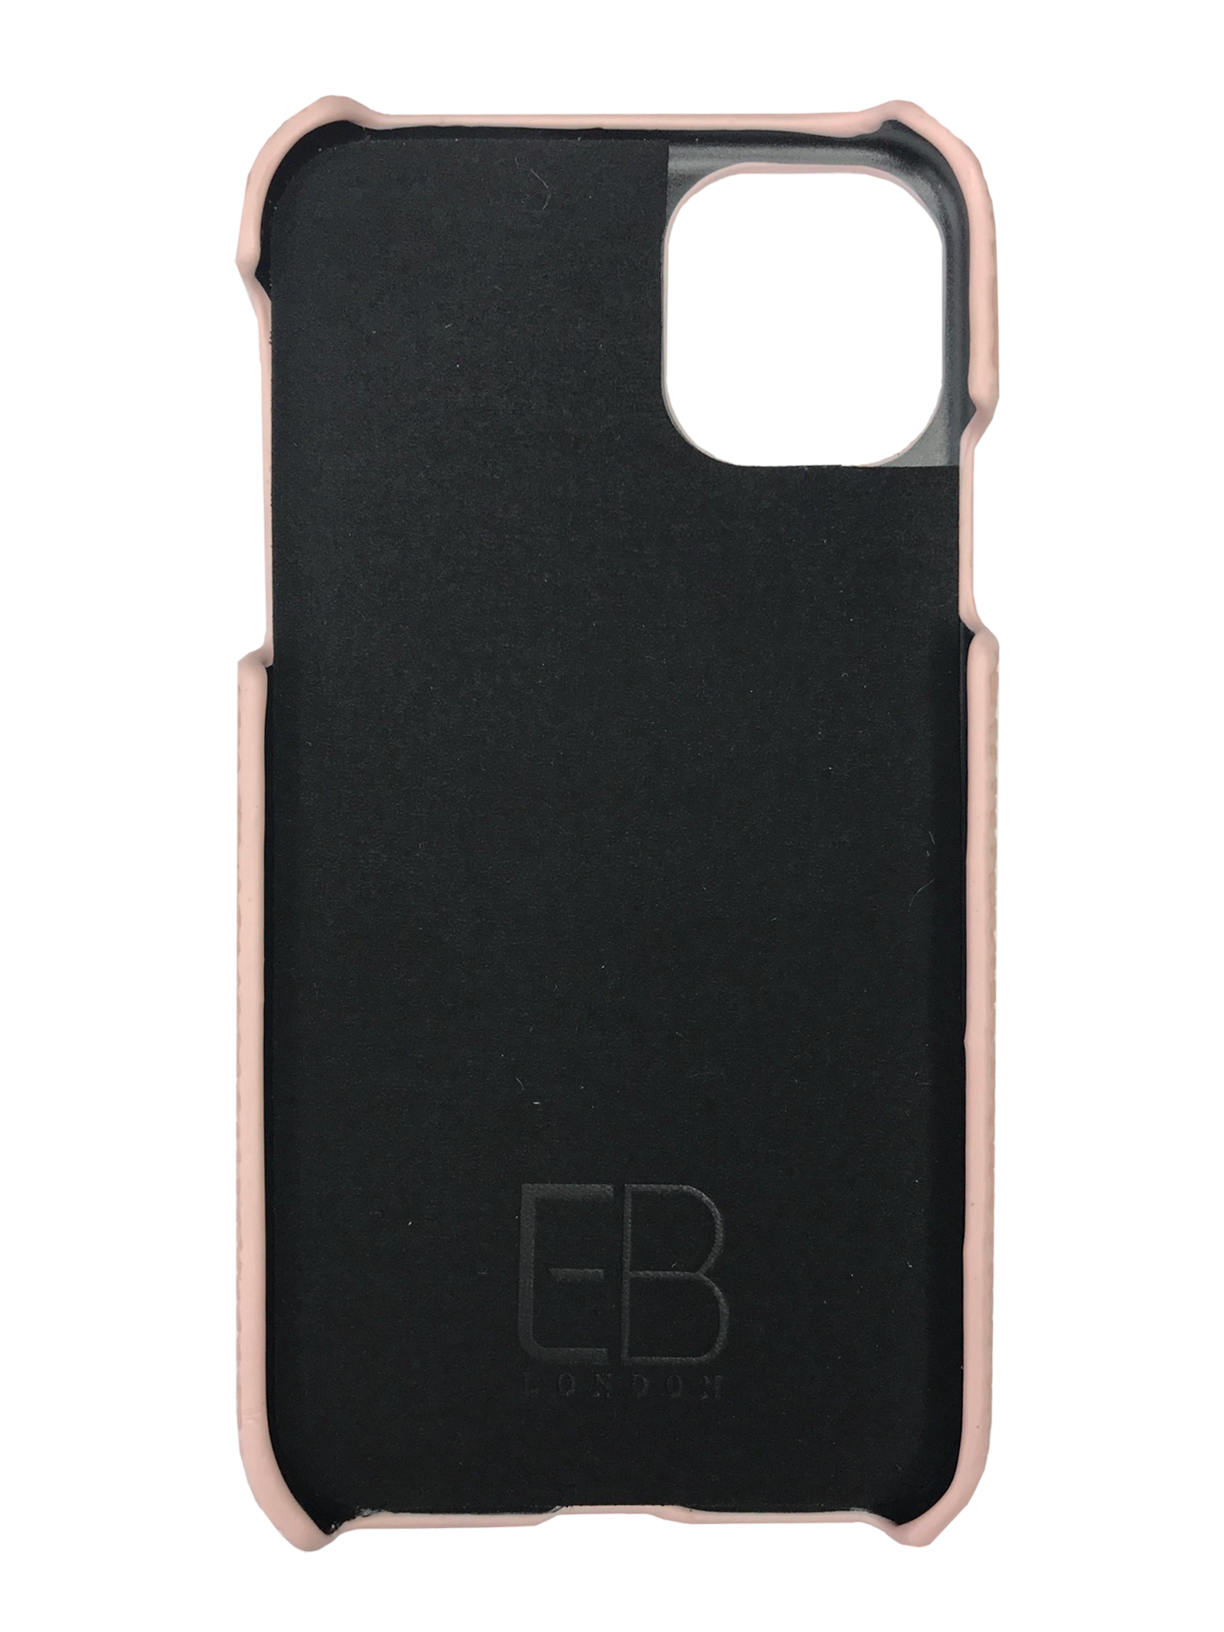 Blush Pink - iPhone XR / iPhone 11